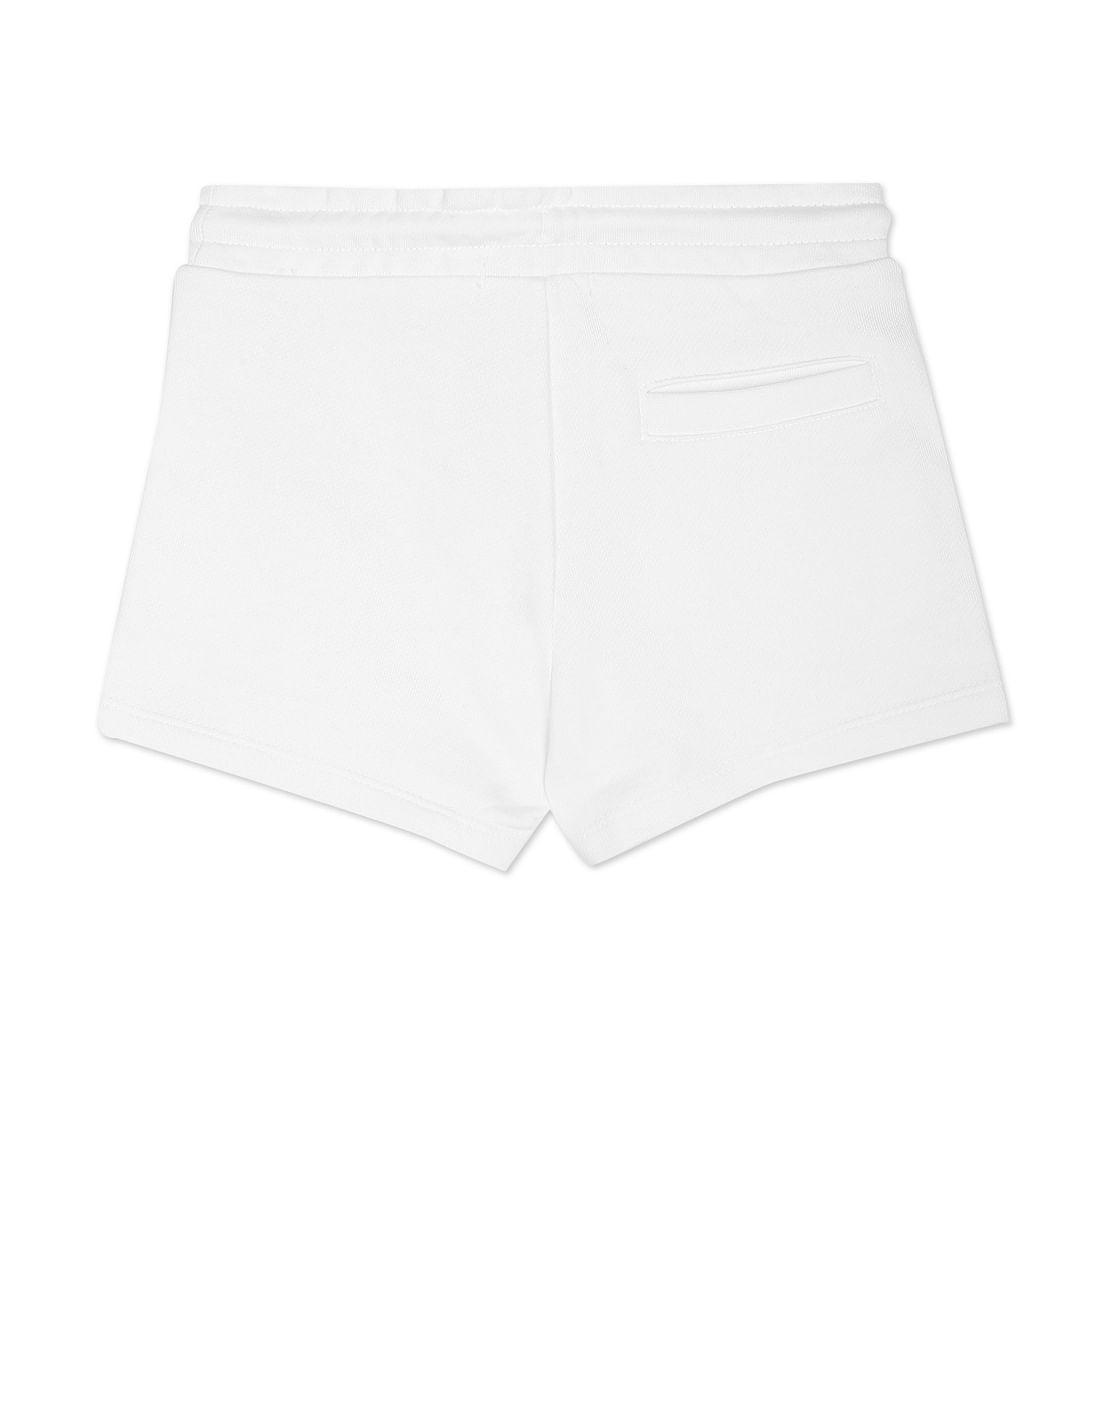 Trousers Shorts Pt Torino - Soft cotton white short pants -  BTKCZ00CL1NT220010